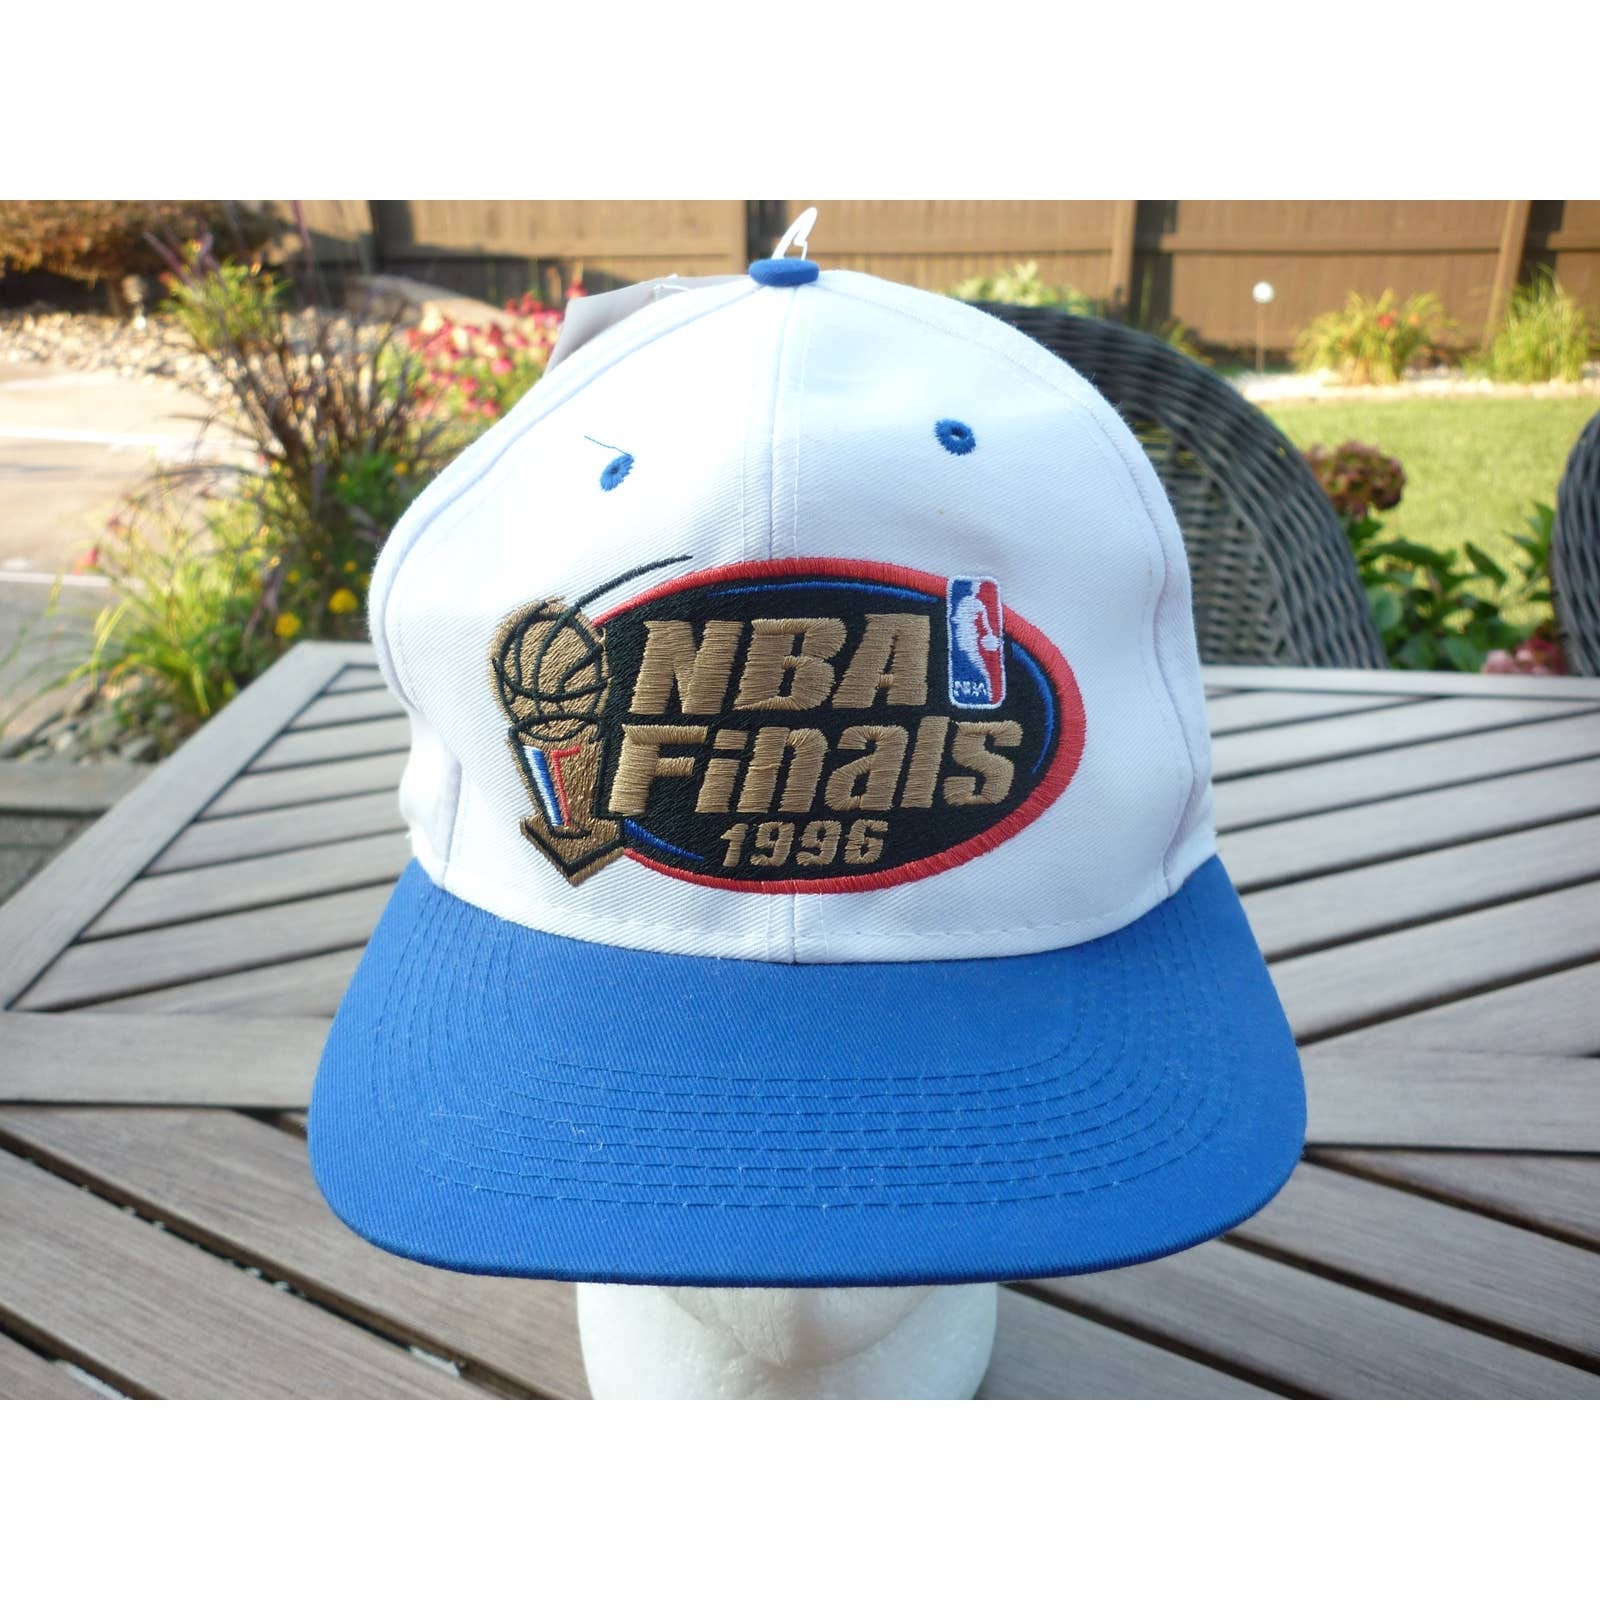 NEW Vintage Rare 1996 Chicago Bulls Champion NBA Sports Hat Cap Vtg Snapback